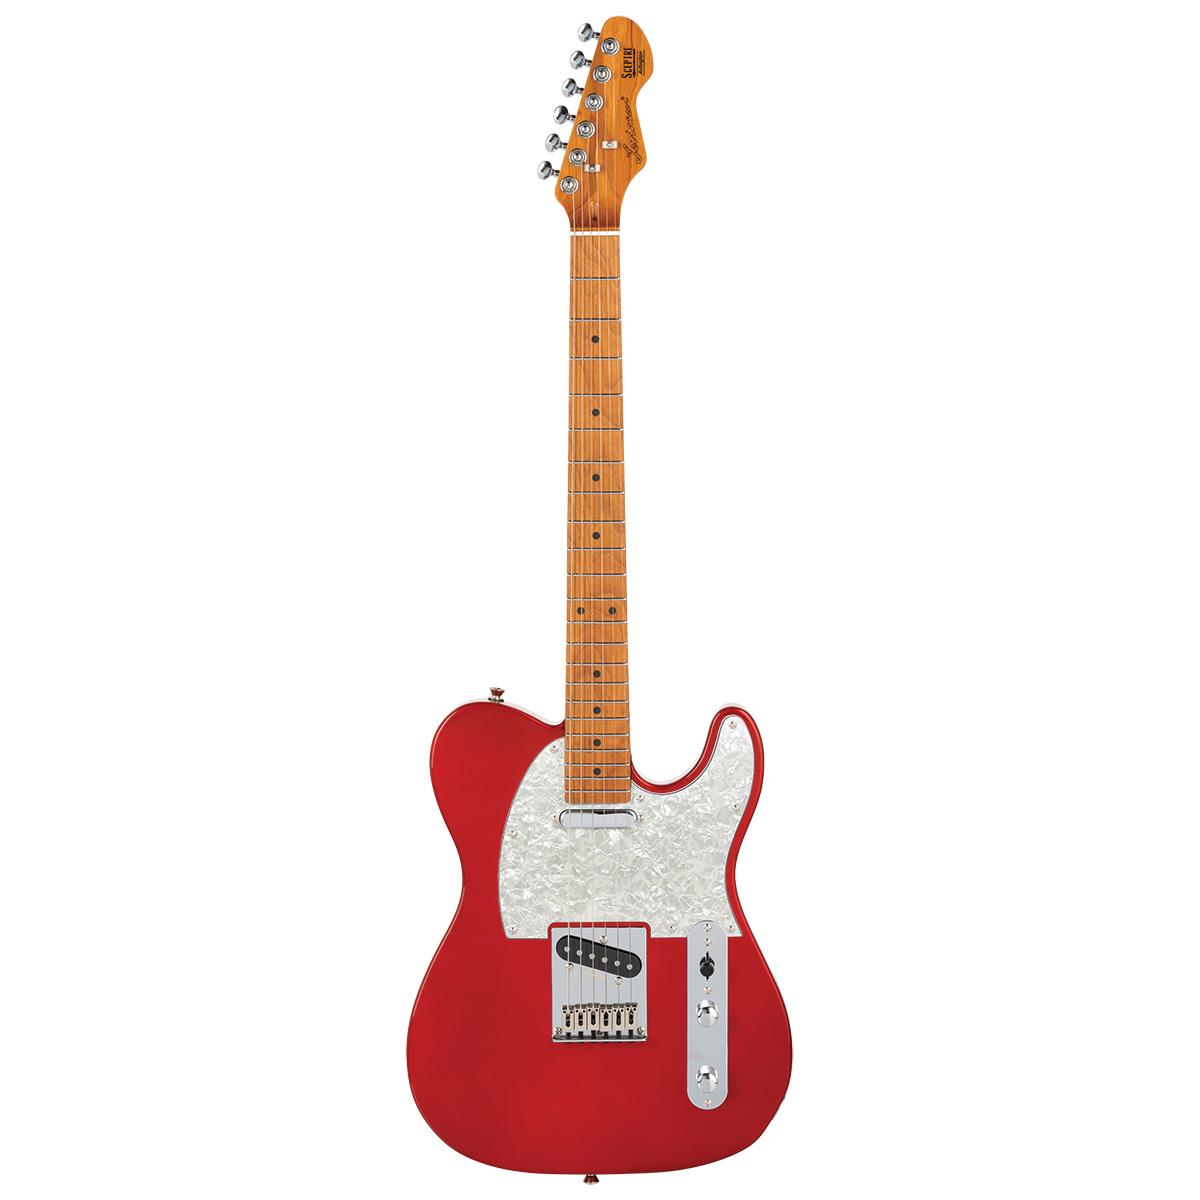 Levinson Sceptre Arlington Standard Electric Guitar SS Maple FB Candy Apple Red